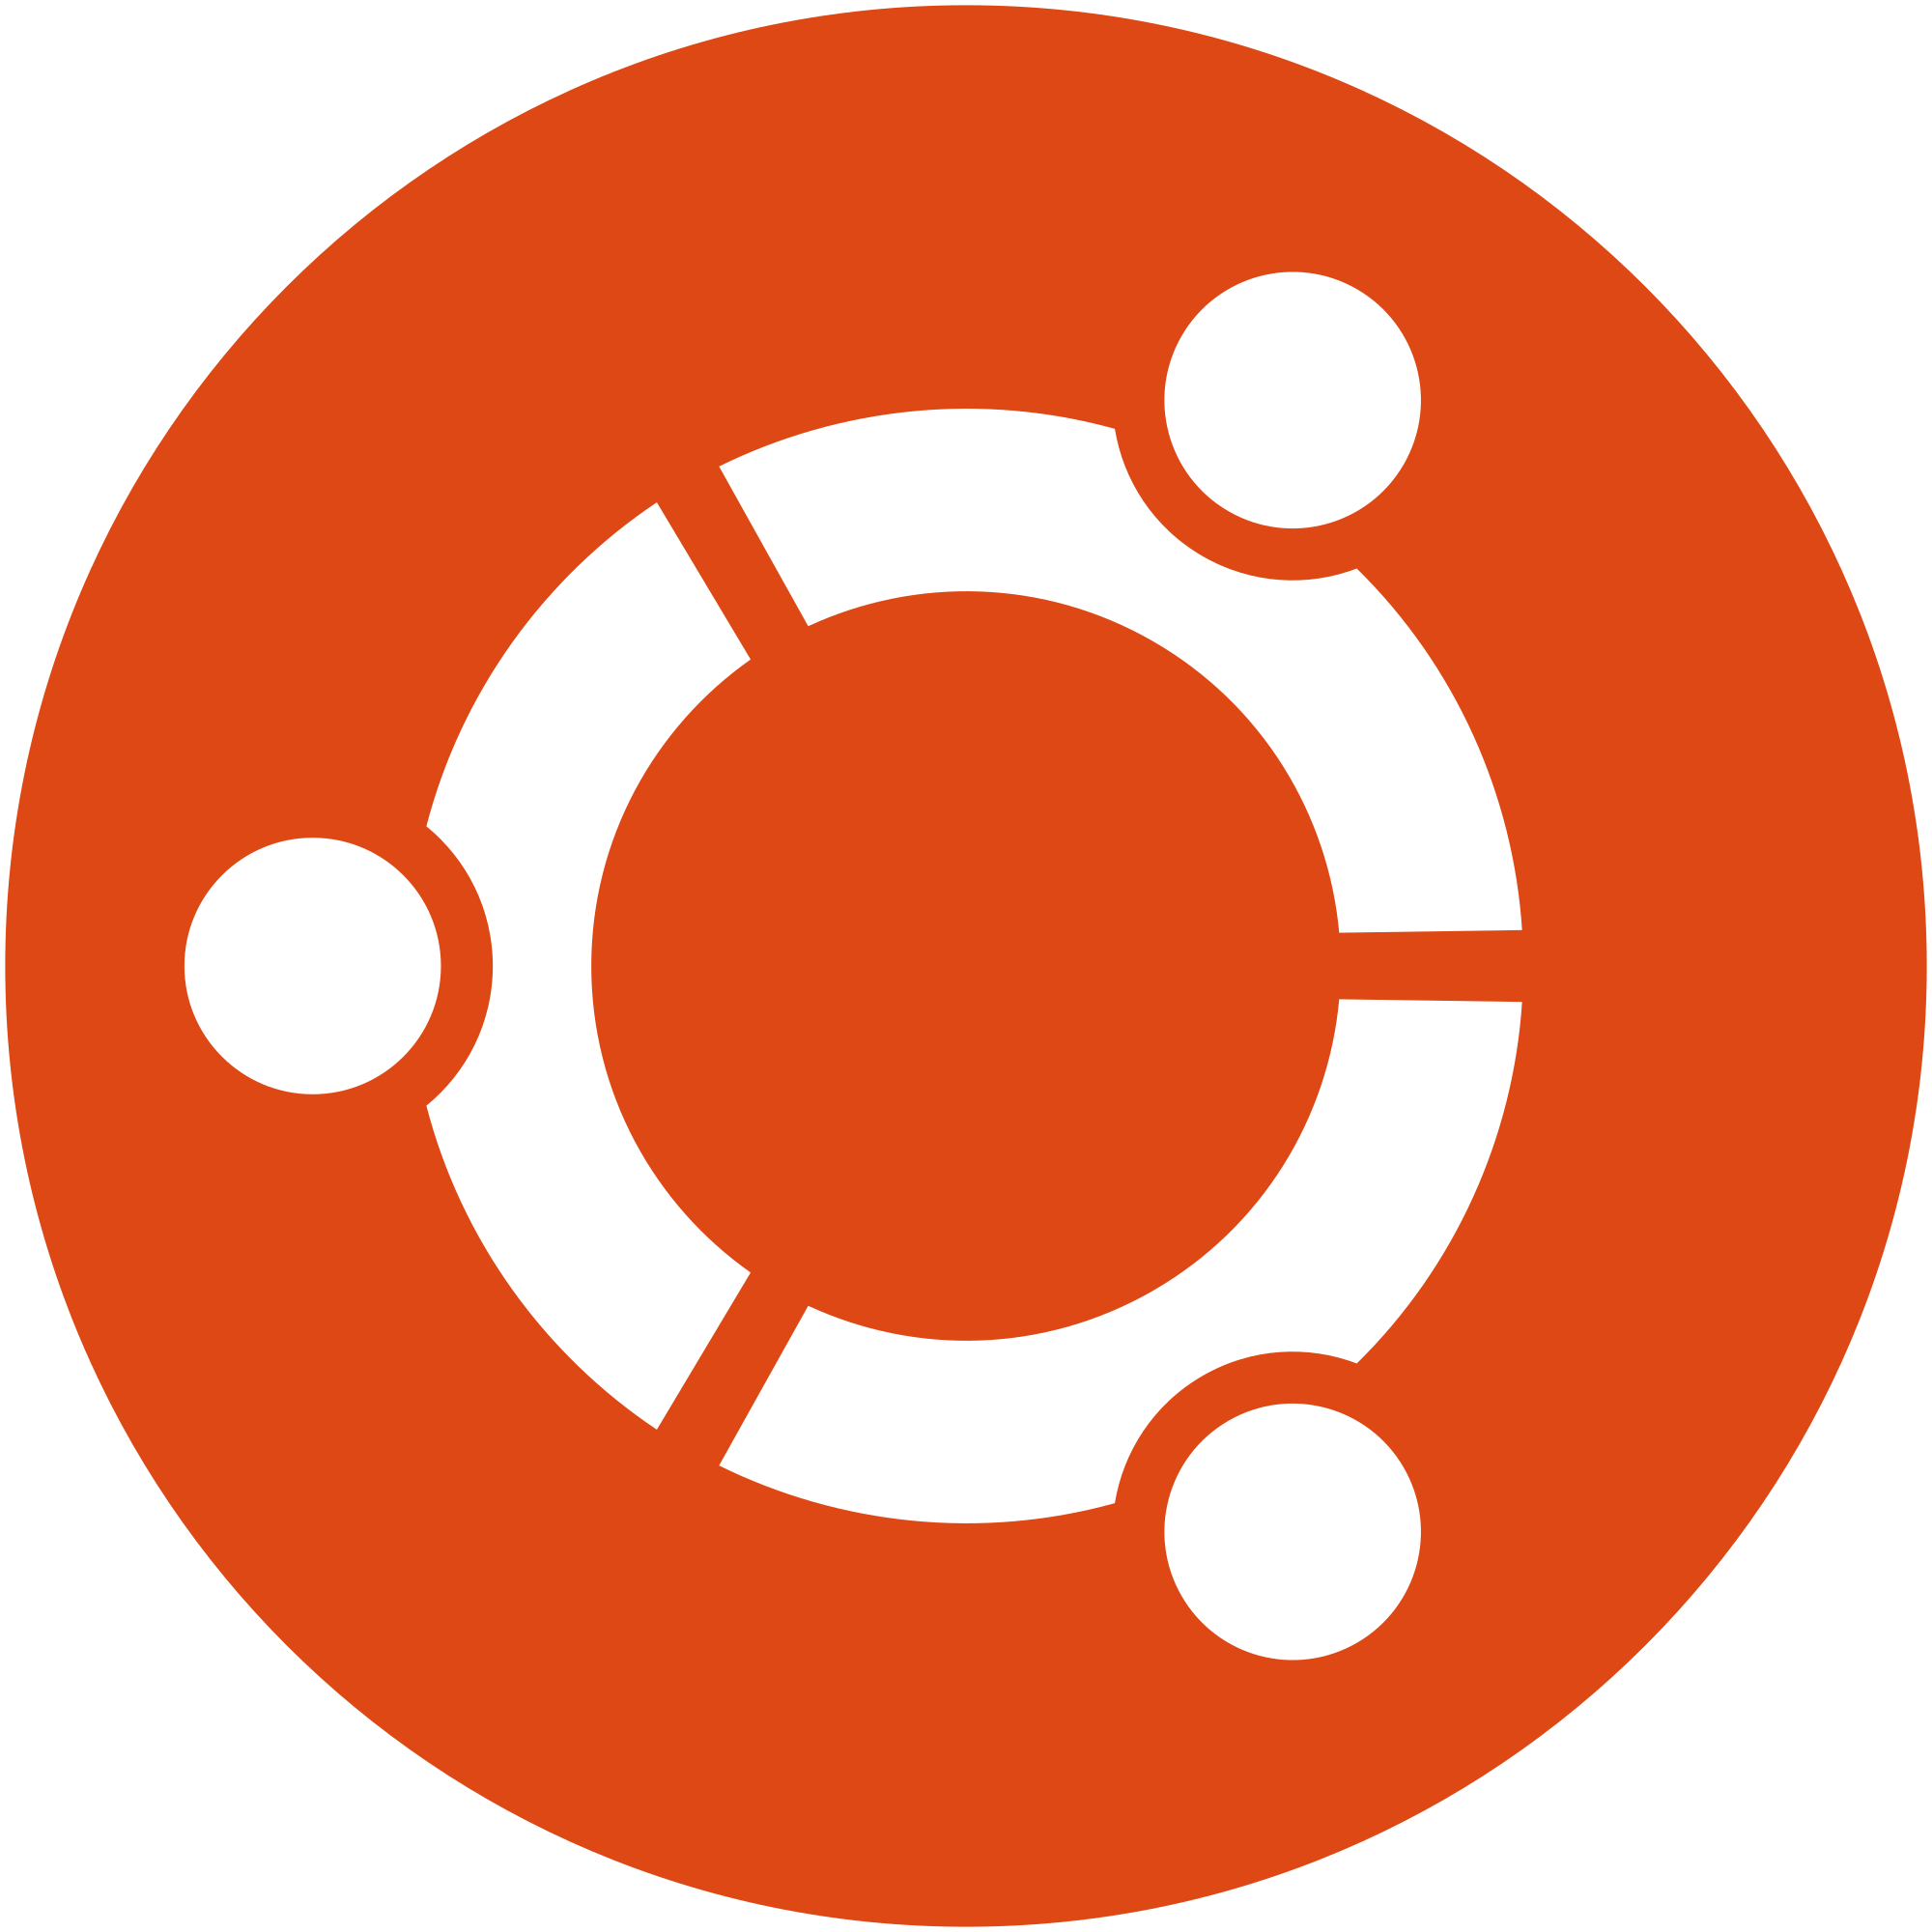 Orange Hex Logo - File:Logo-ubuntu cof-orange-hex.svg - Wikimedia Commons